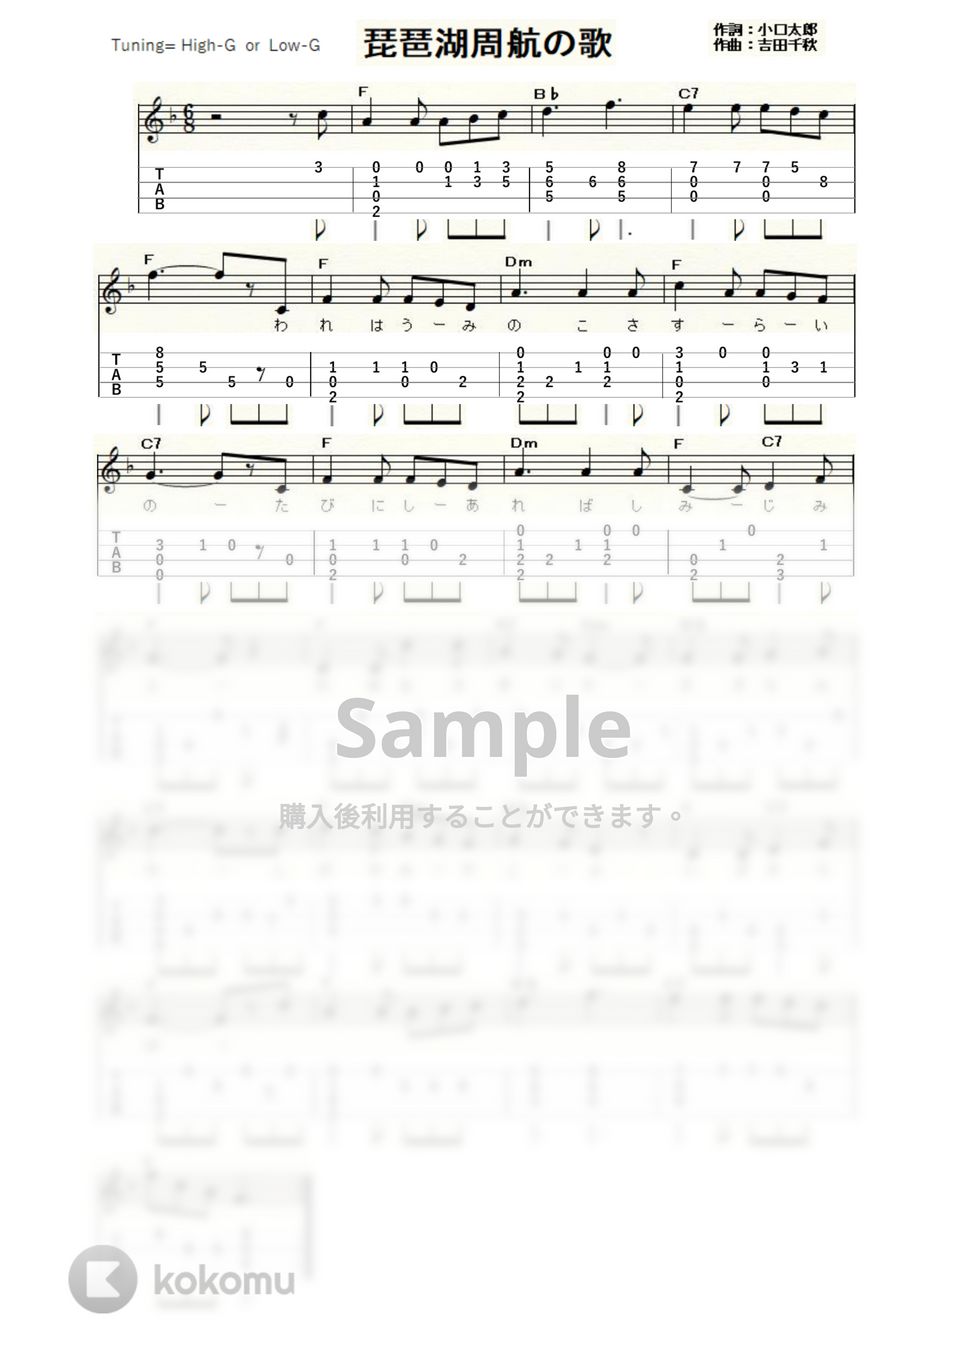 琵琶湖周航の歌 (ｳｸﾚﾚｿﾛ / High-G,Low-G / 初～中級) by ukulelepapa